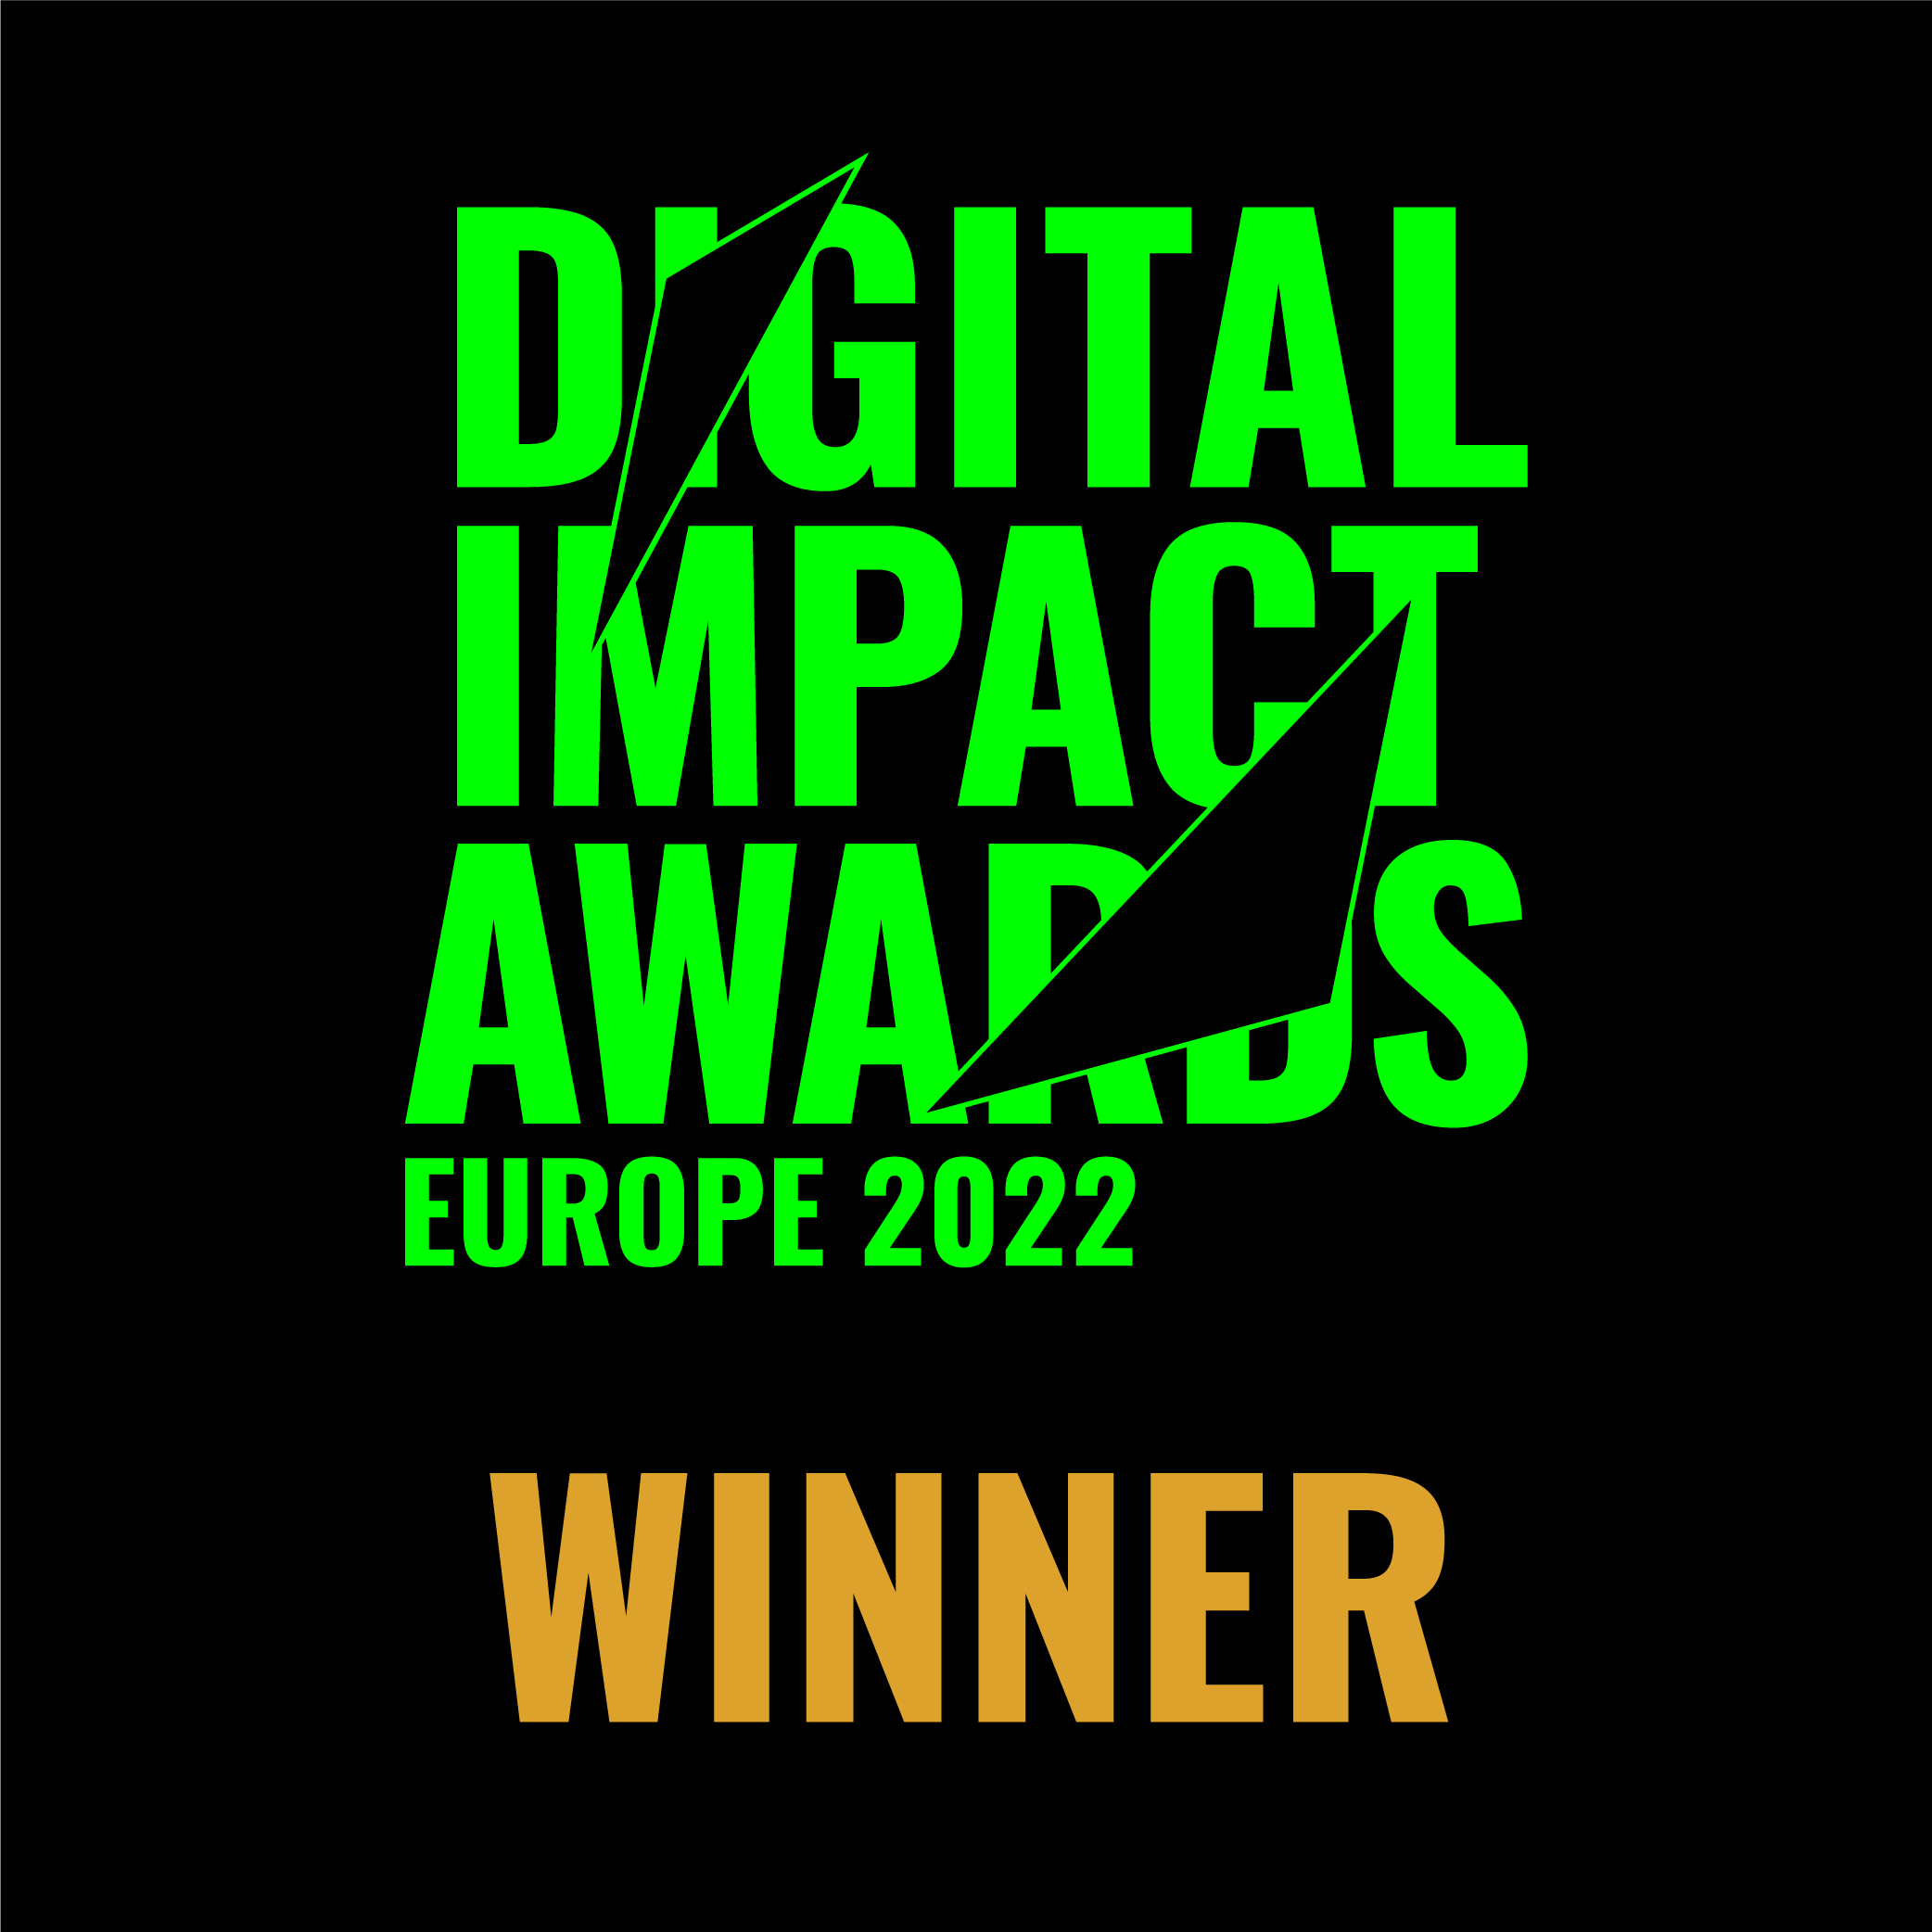 Digital Impact Awards europe 2022 - Winner Gold